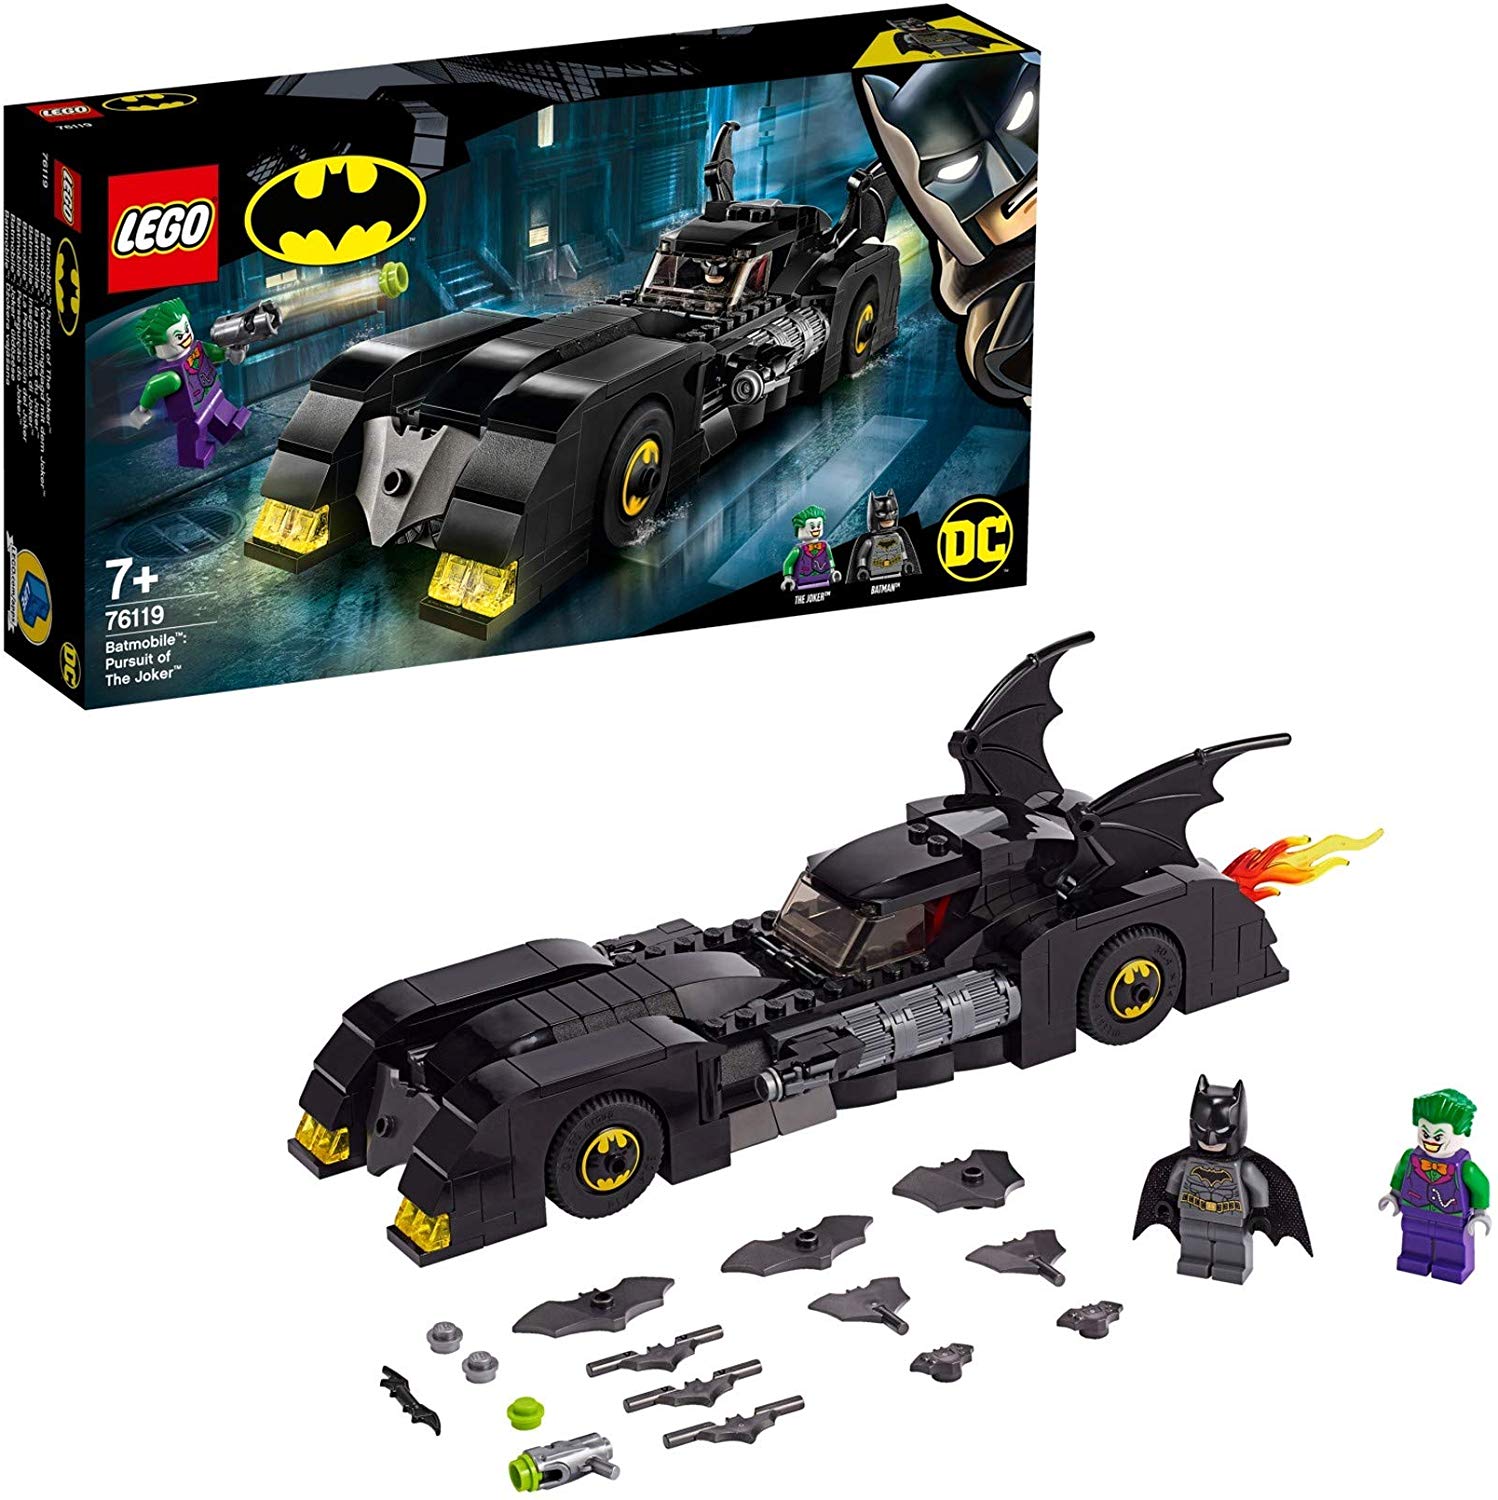 LEGO DC Universe Super Heroes Lego DC Batman Batmobile 76119, Chase with the Joker, Construction Kit